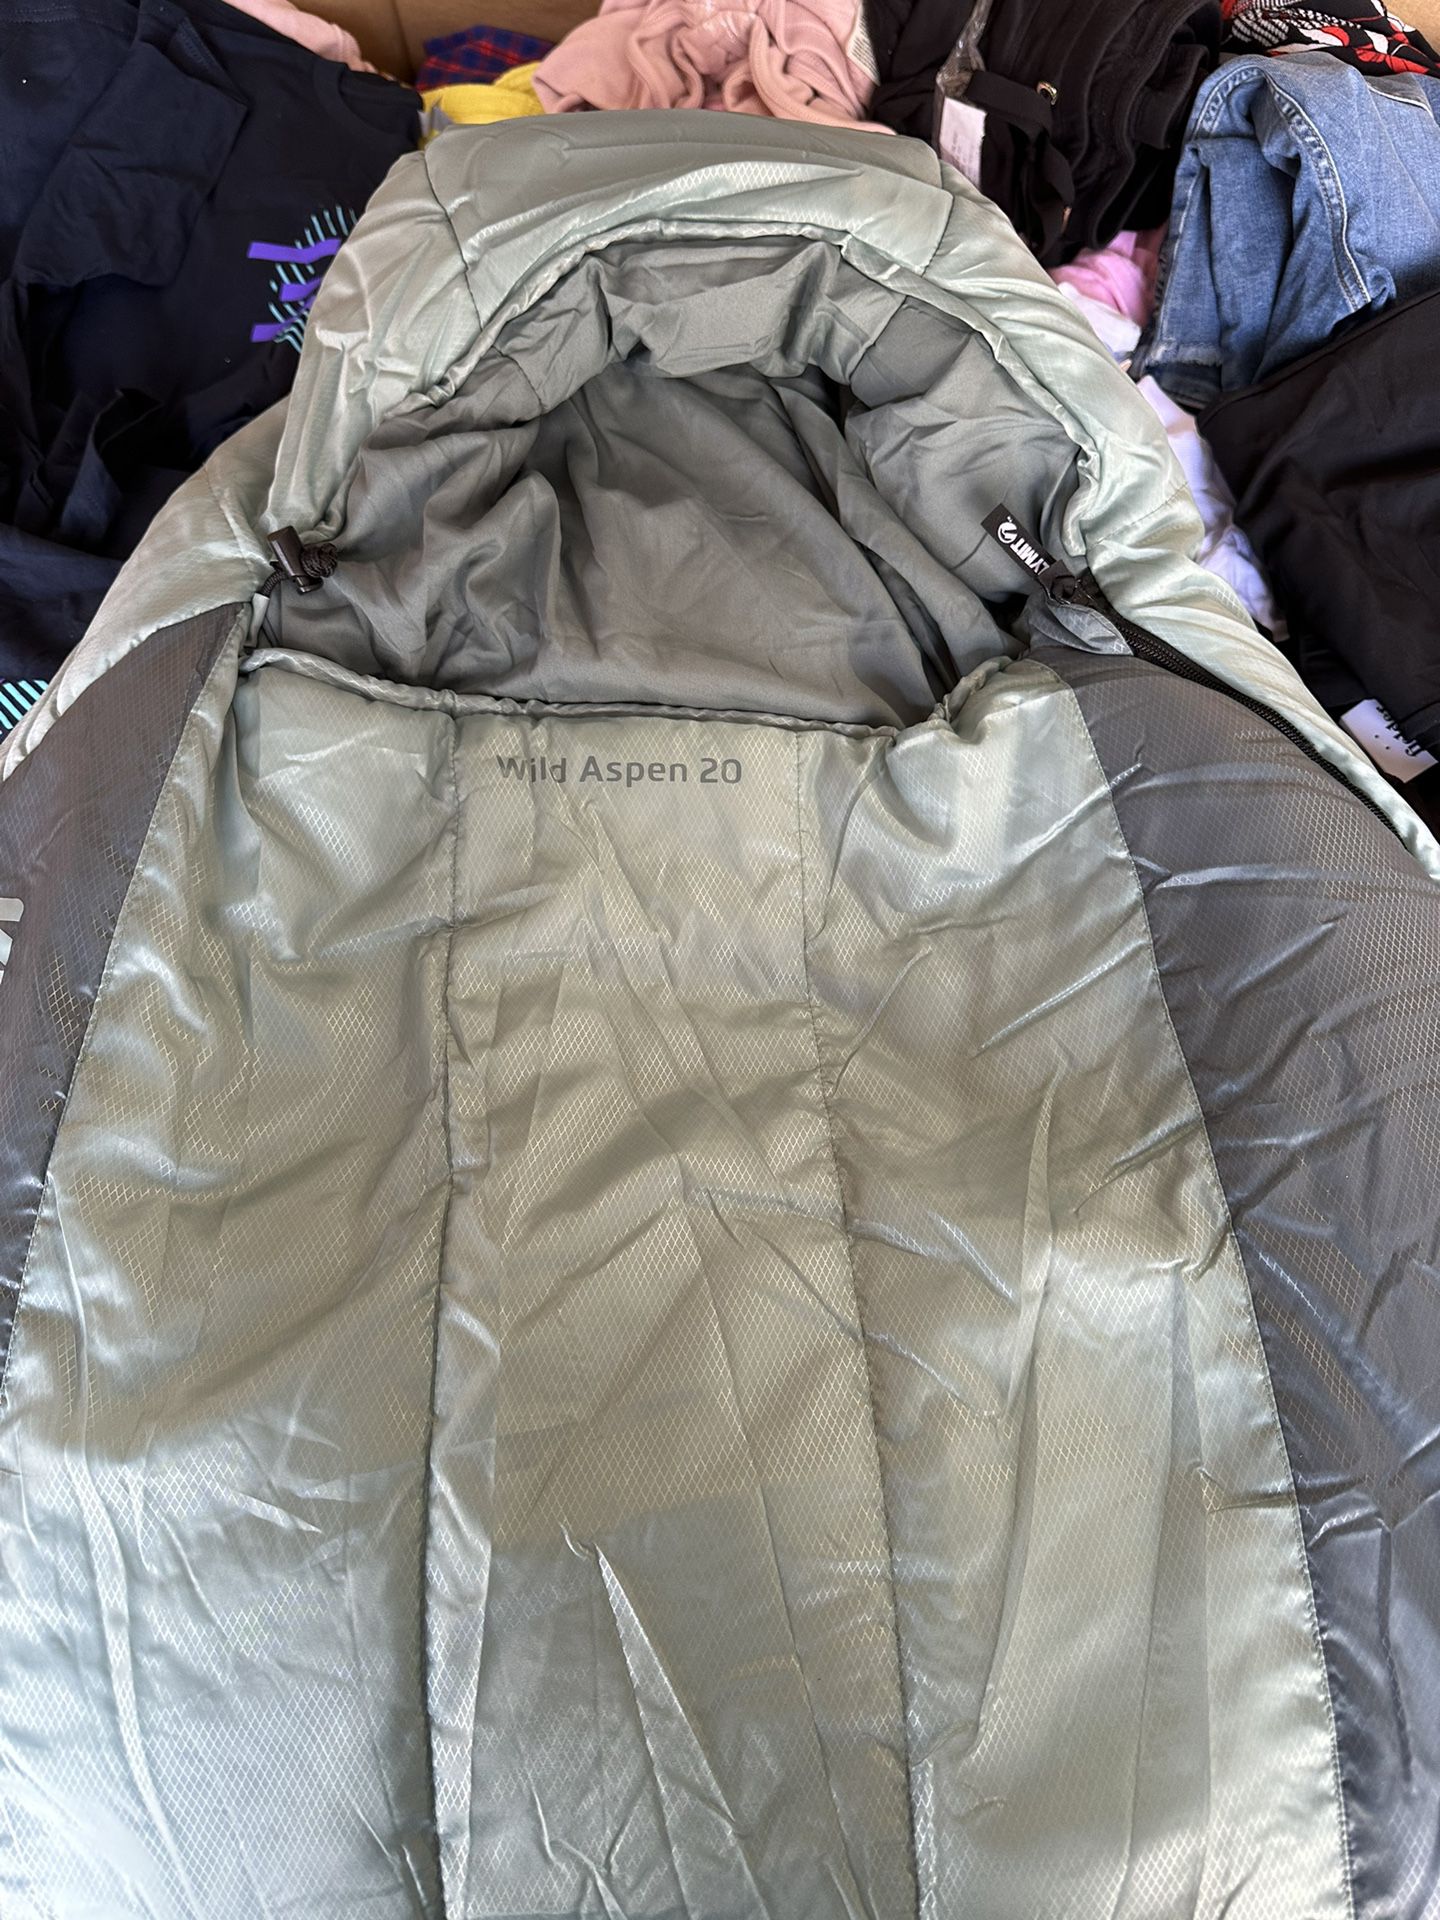 New Klymit Wild Aspen 20 Degree Cold Weather Mummy Sleeping Bag, $40 